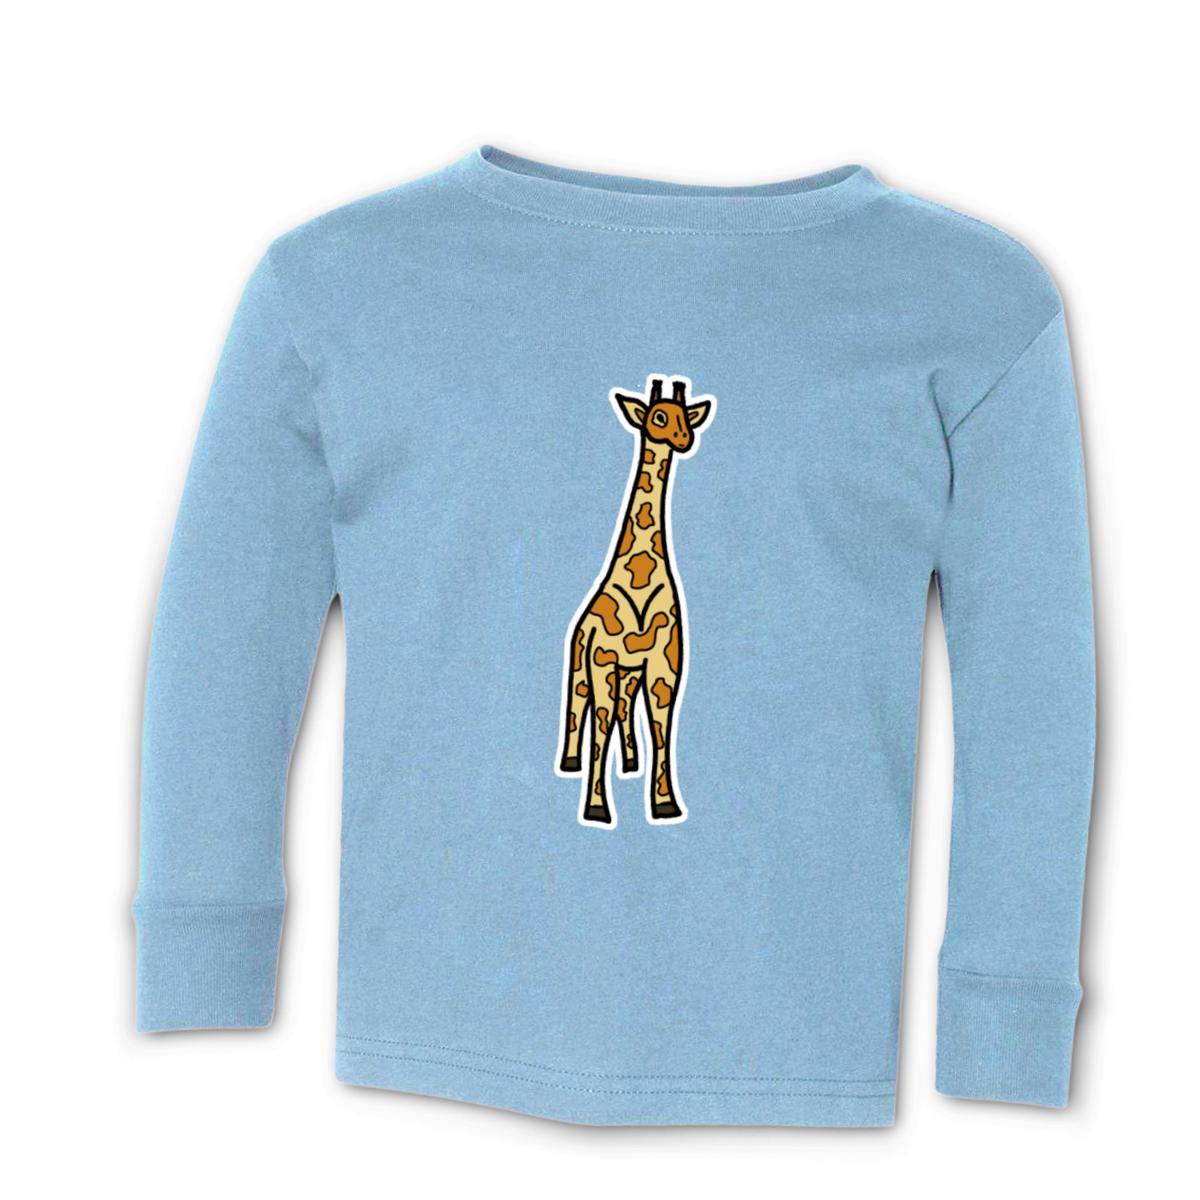 Toy Giraffe Kid's Long Sleeve Tee Large light-blue